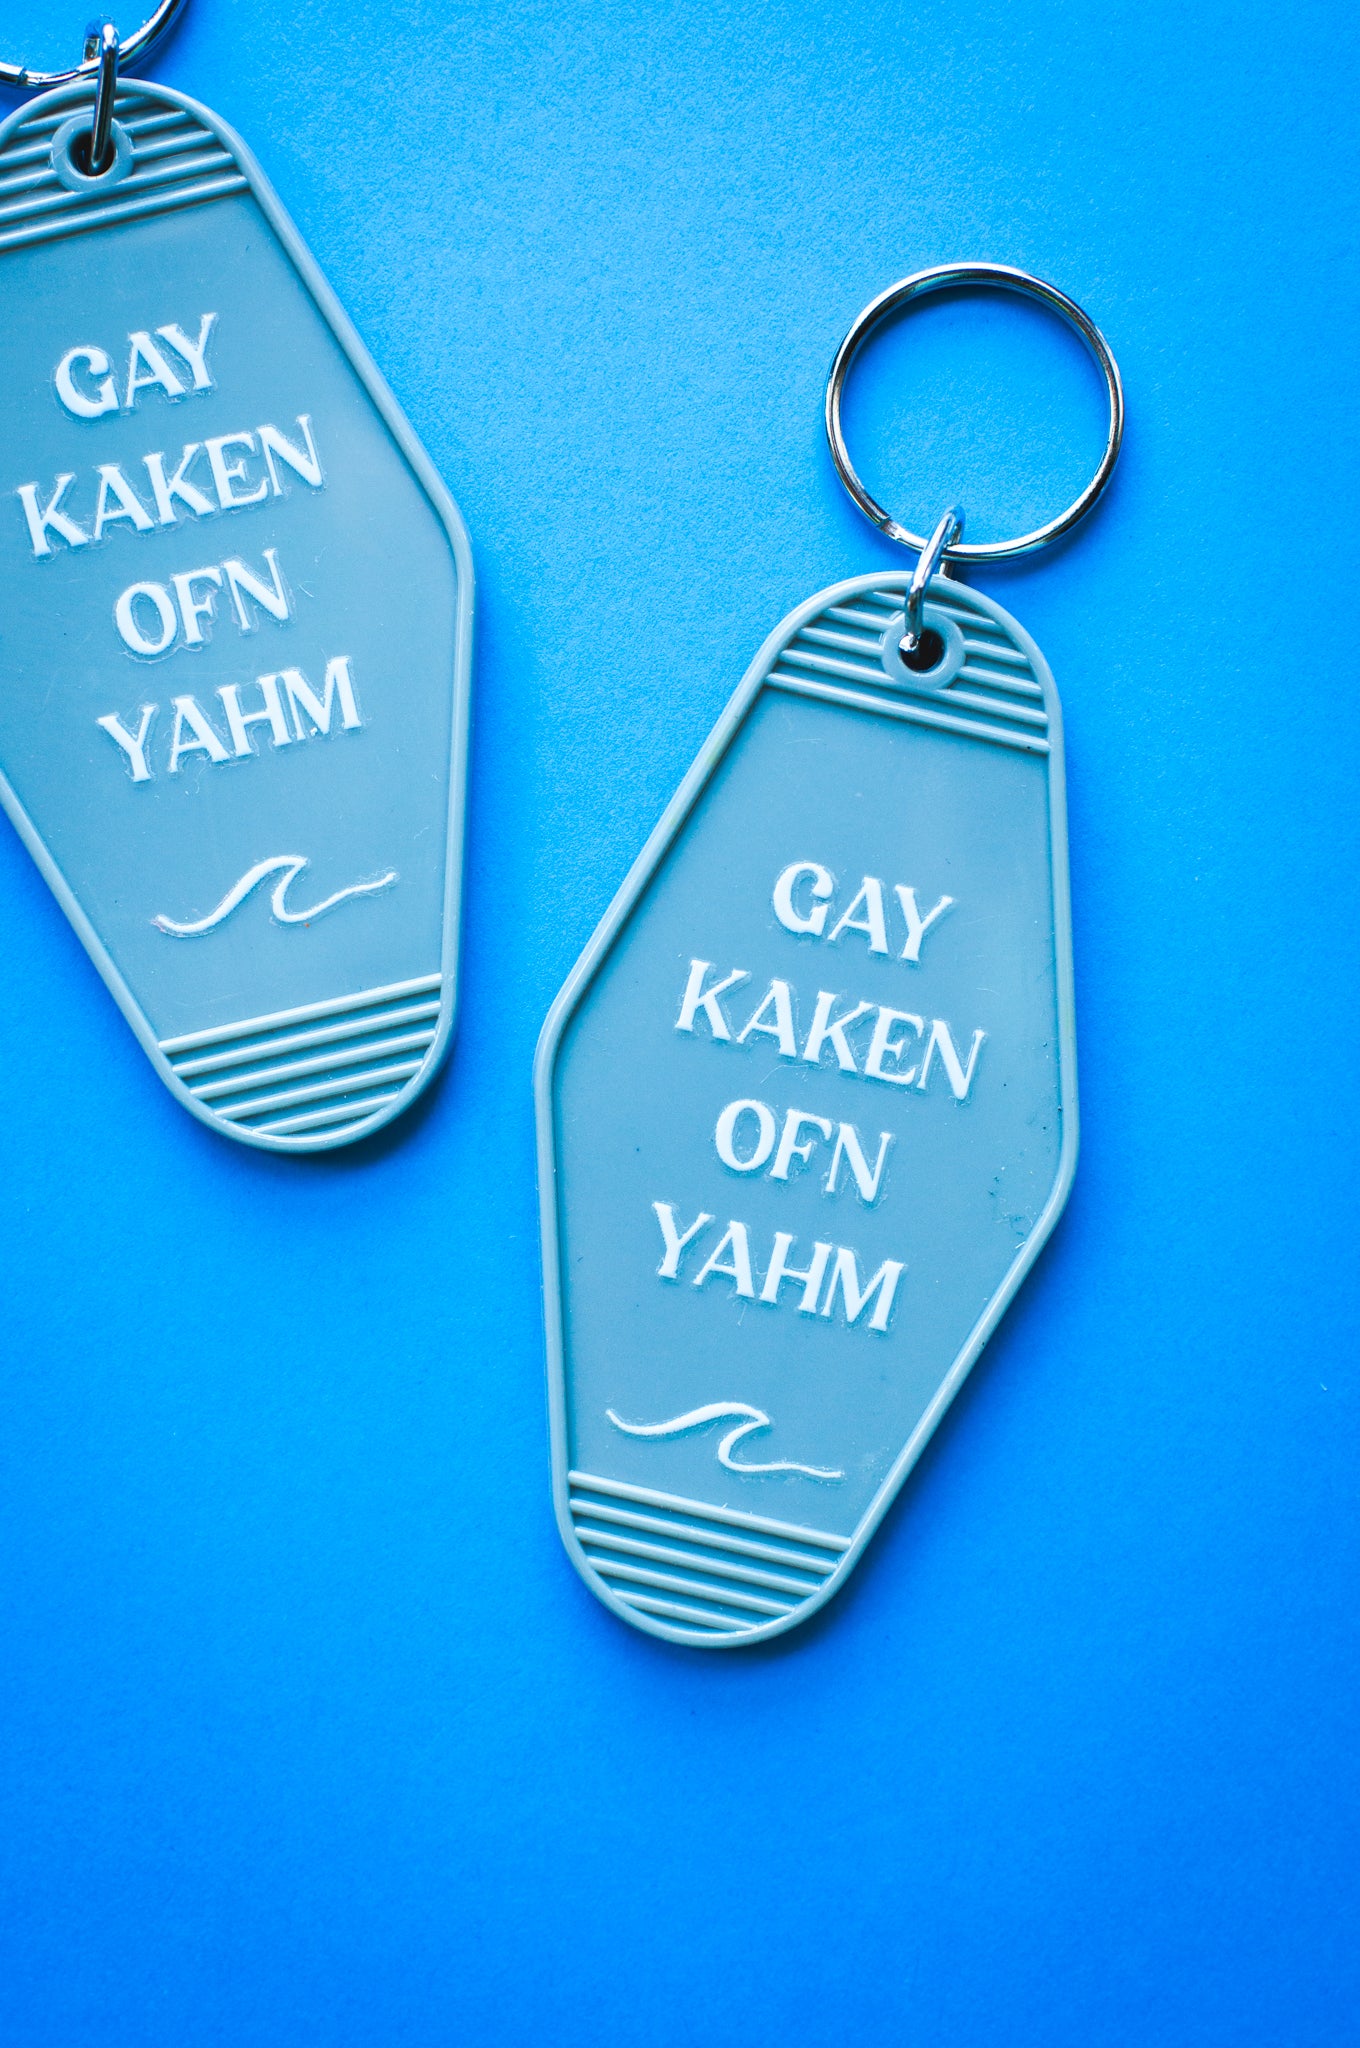 Gay Kaken Ofn Yahm